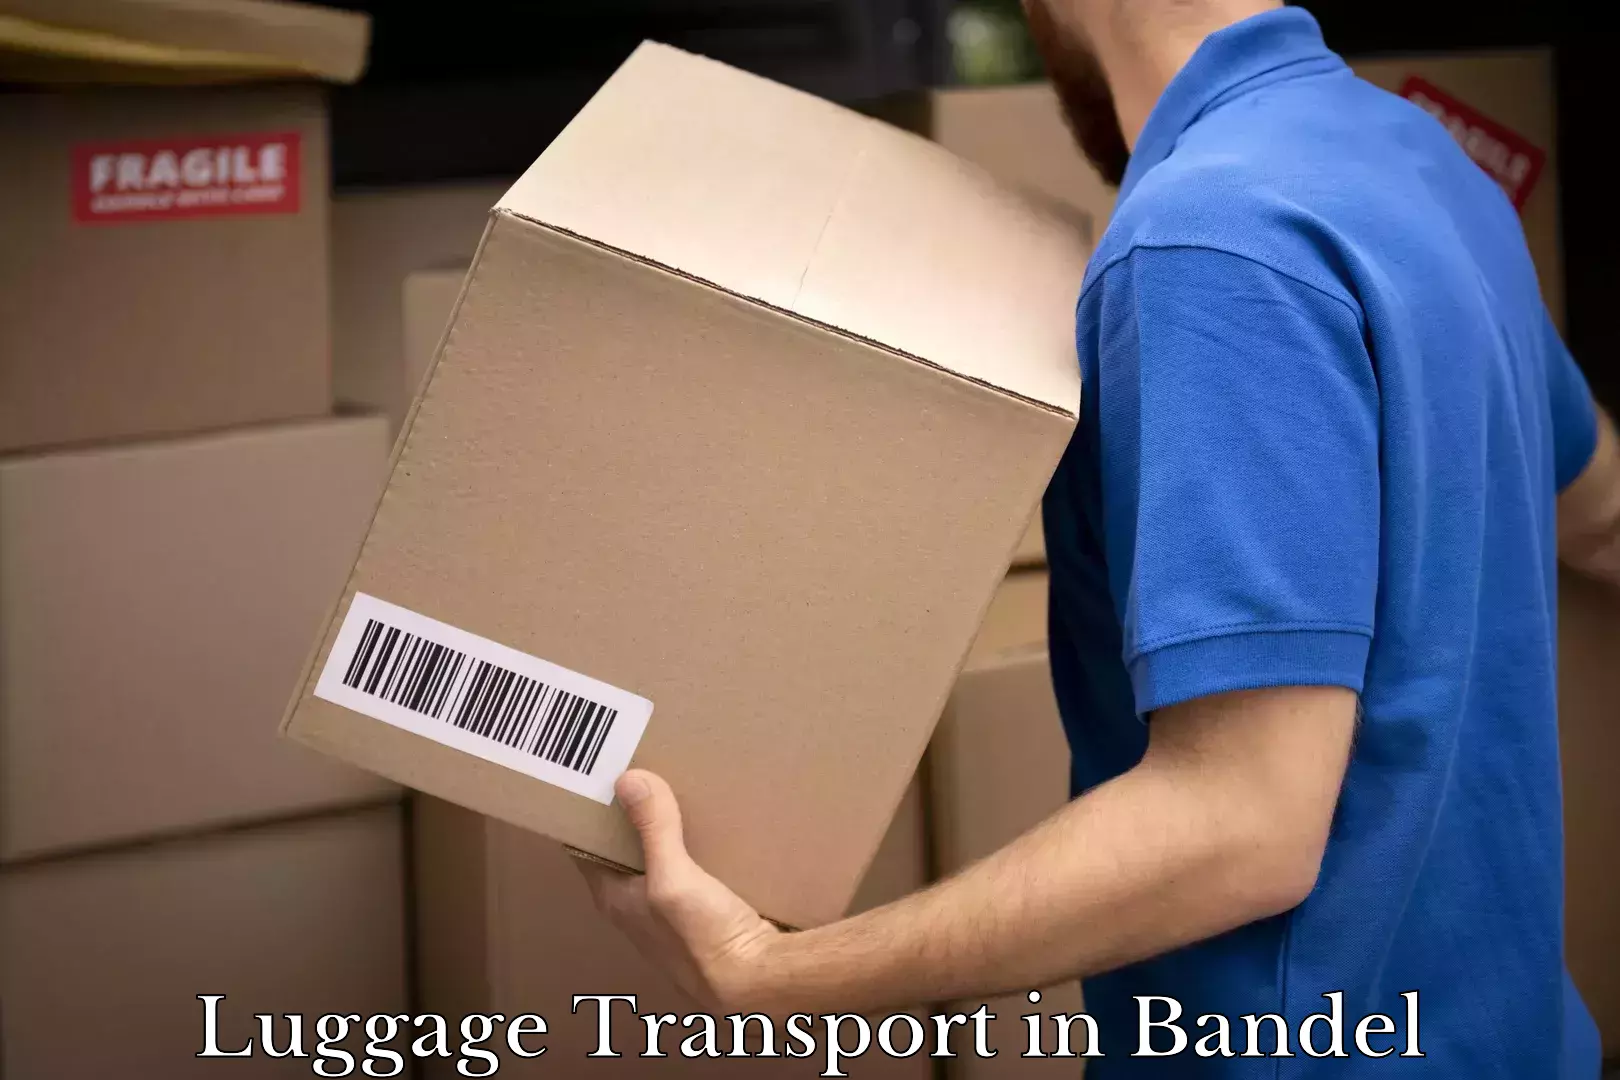 Comprehensive baggage service in Bandel